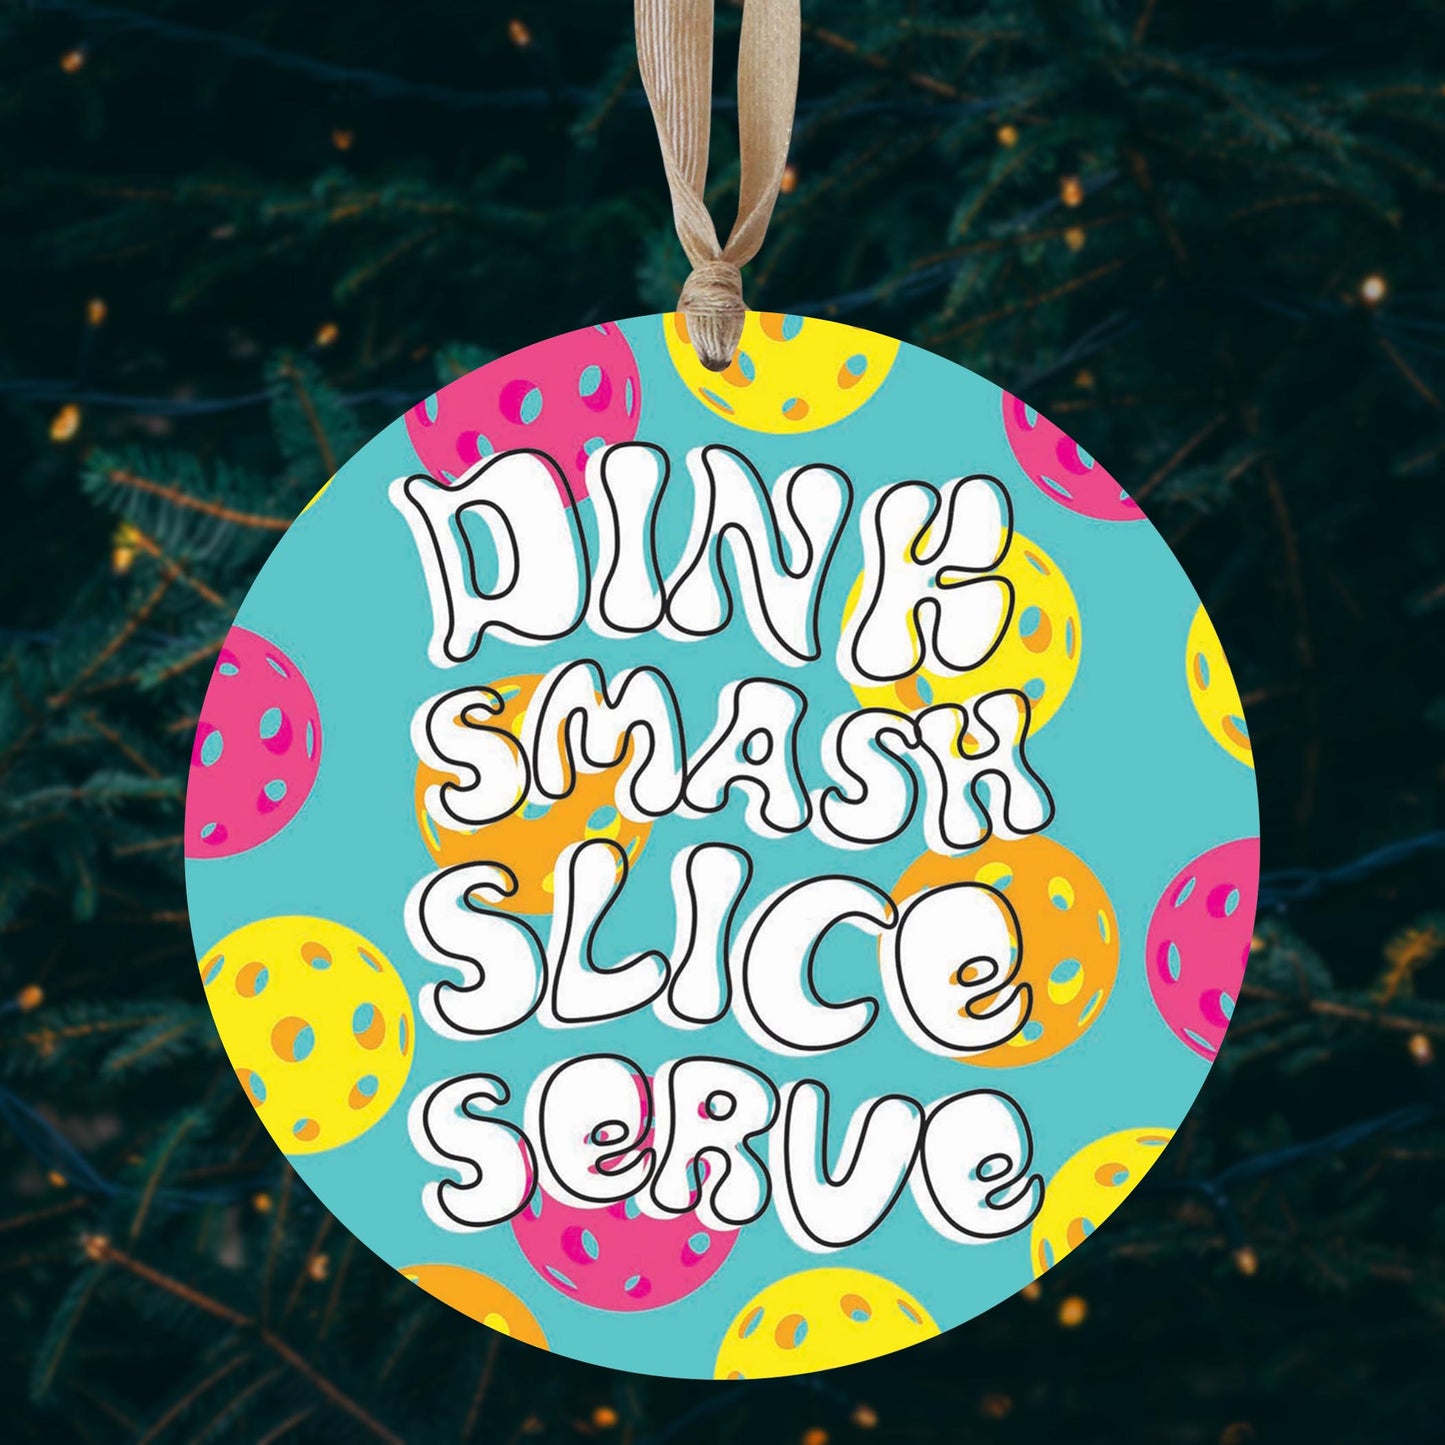 Neon Pickleball Dinnk Smash Slice Serve | 8x8